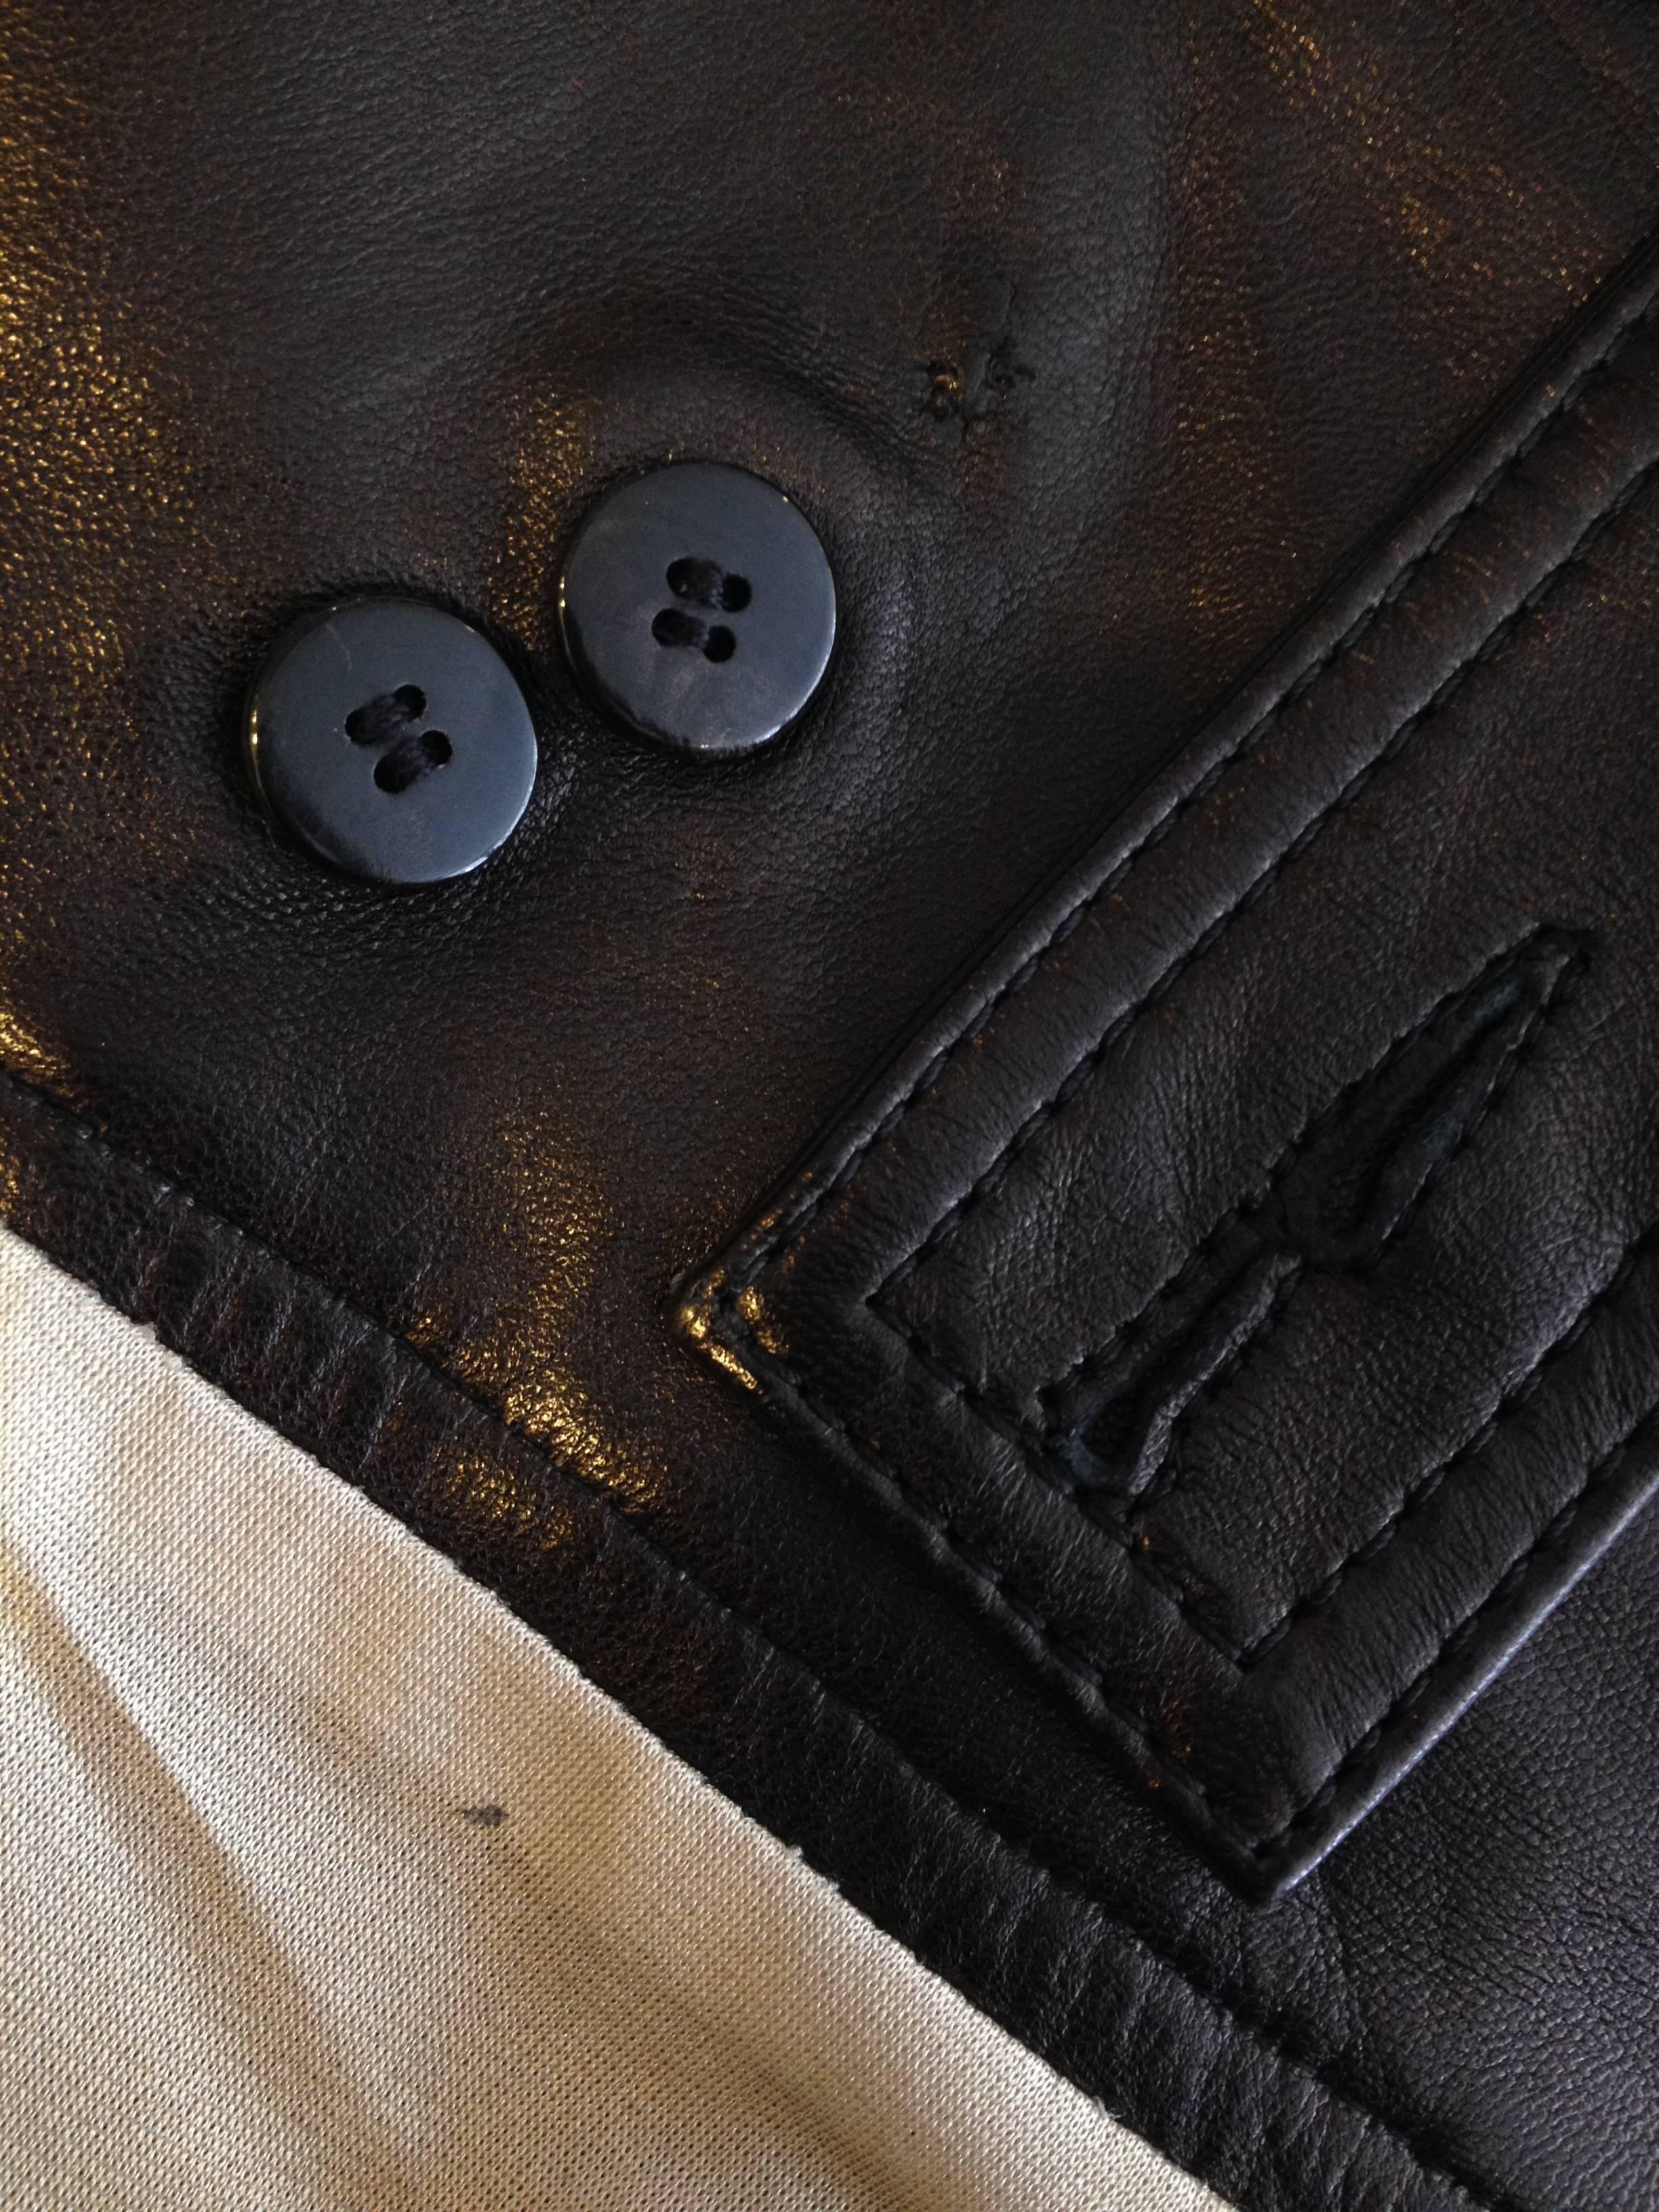 Yves Saint Laurent Black Leather Overalls 1